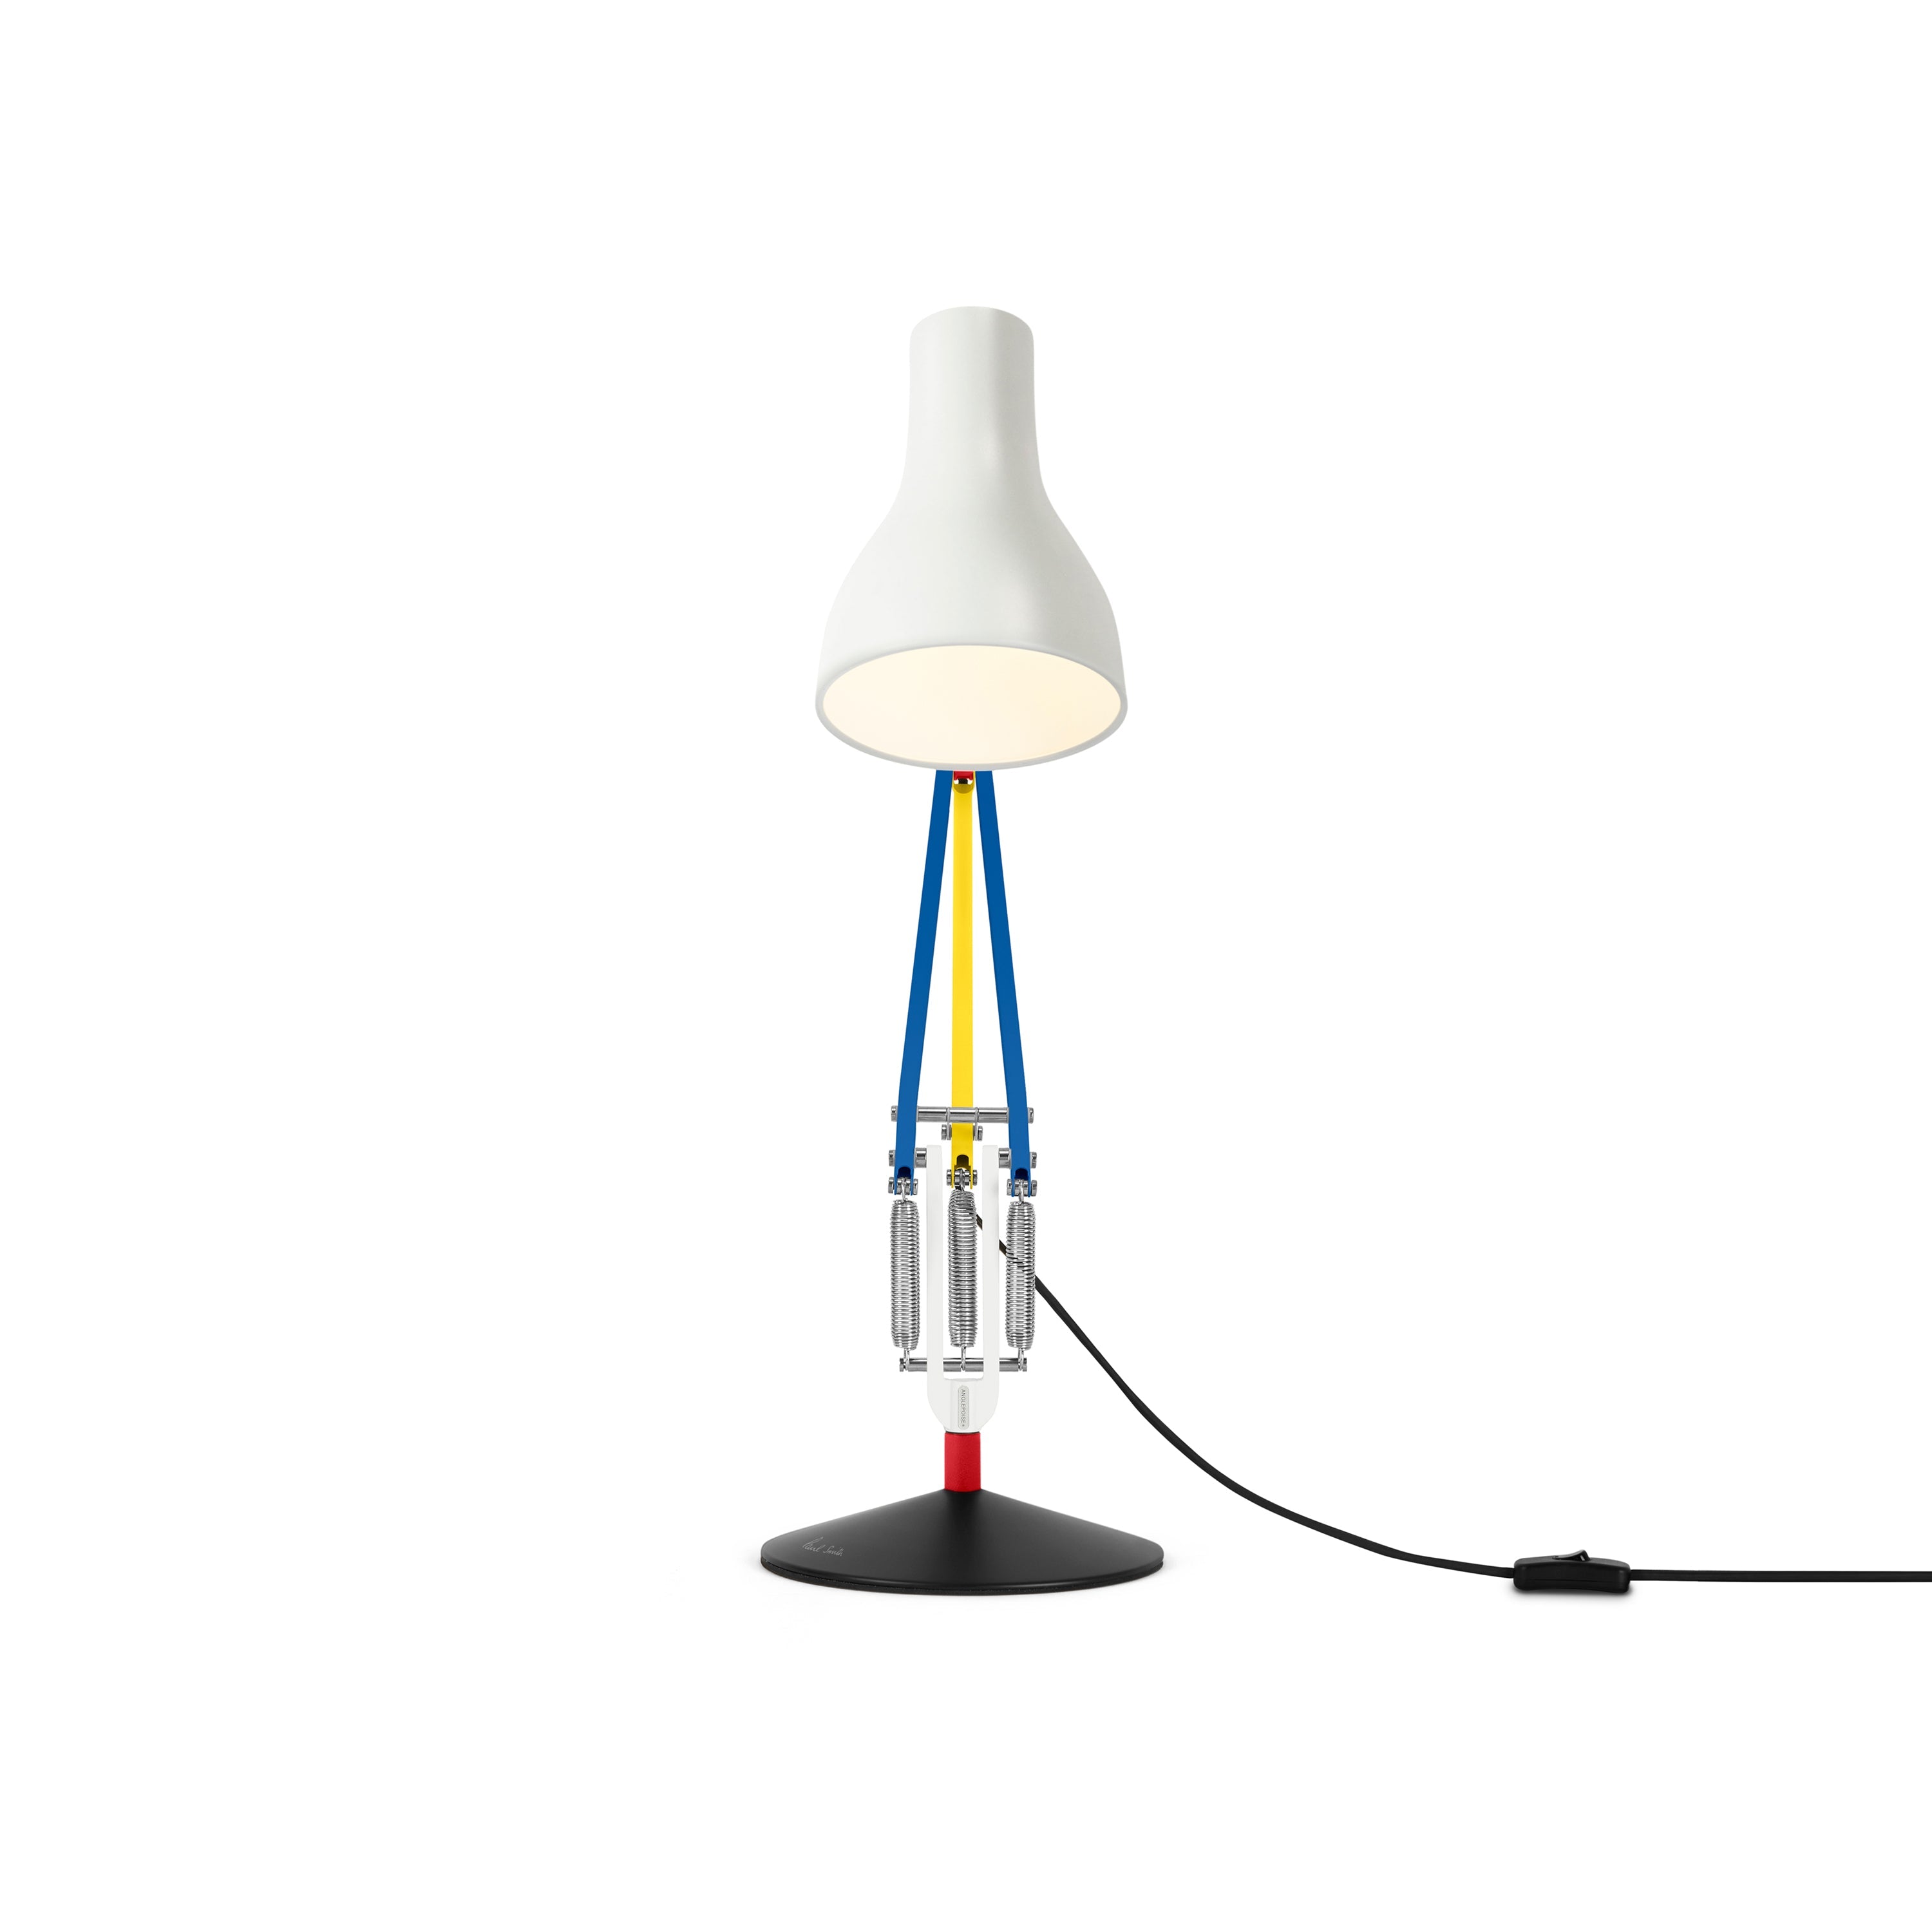 Type 75 Desk Lamp: Paul Smith Edition Three